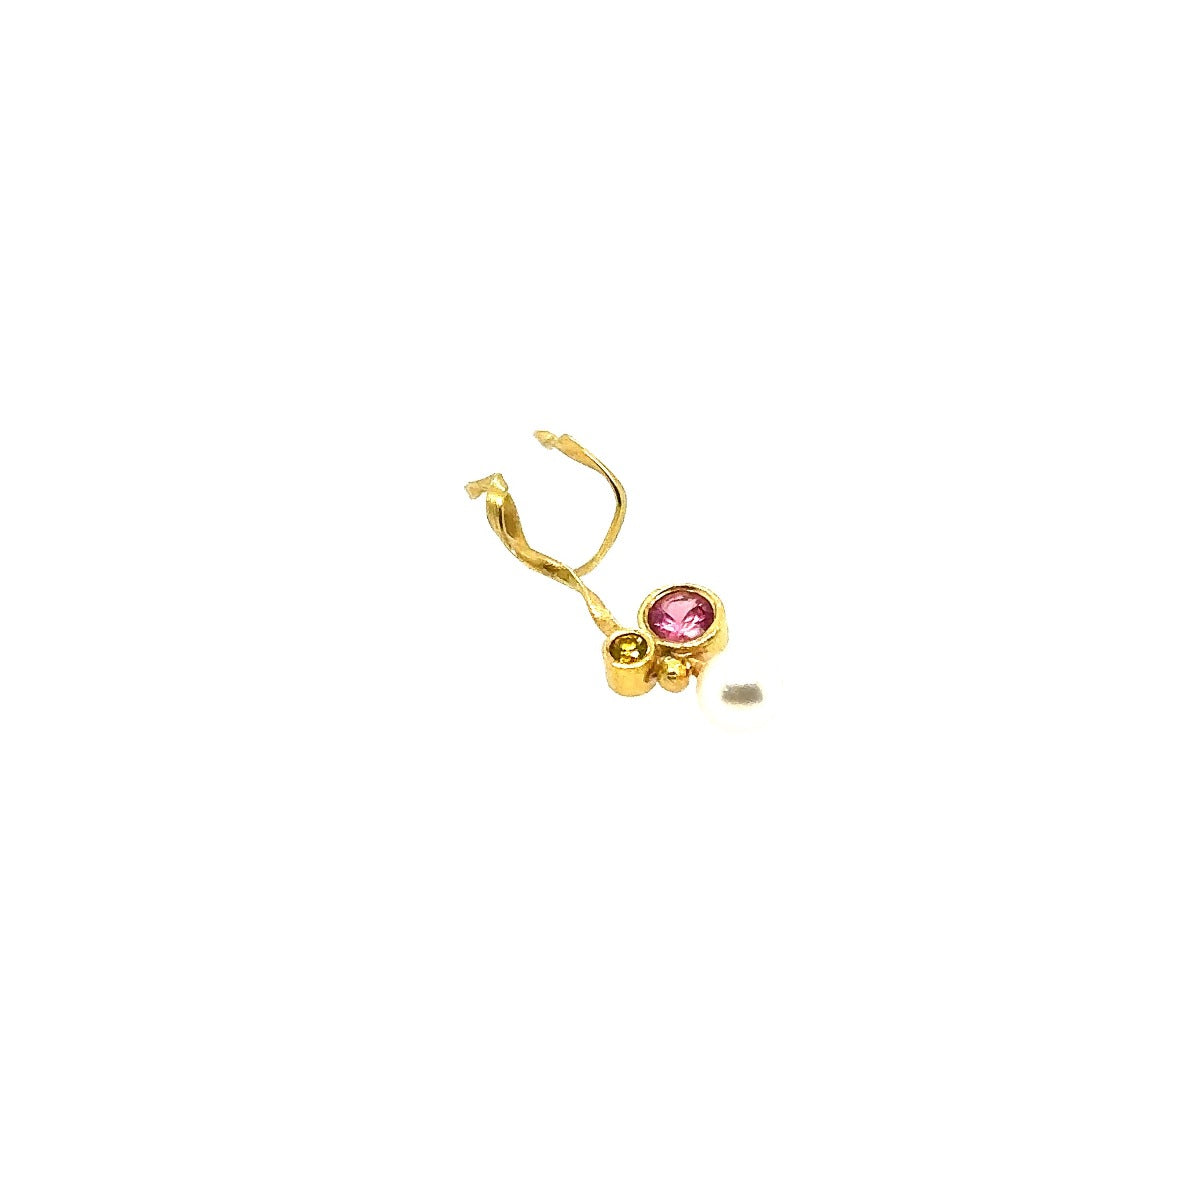 Flair earring 18 kt. gold, yellow diamond, pink sapphire and akoya pearl